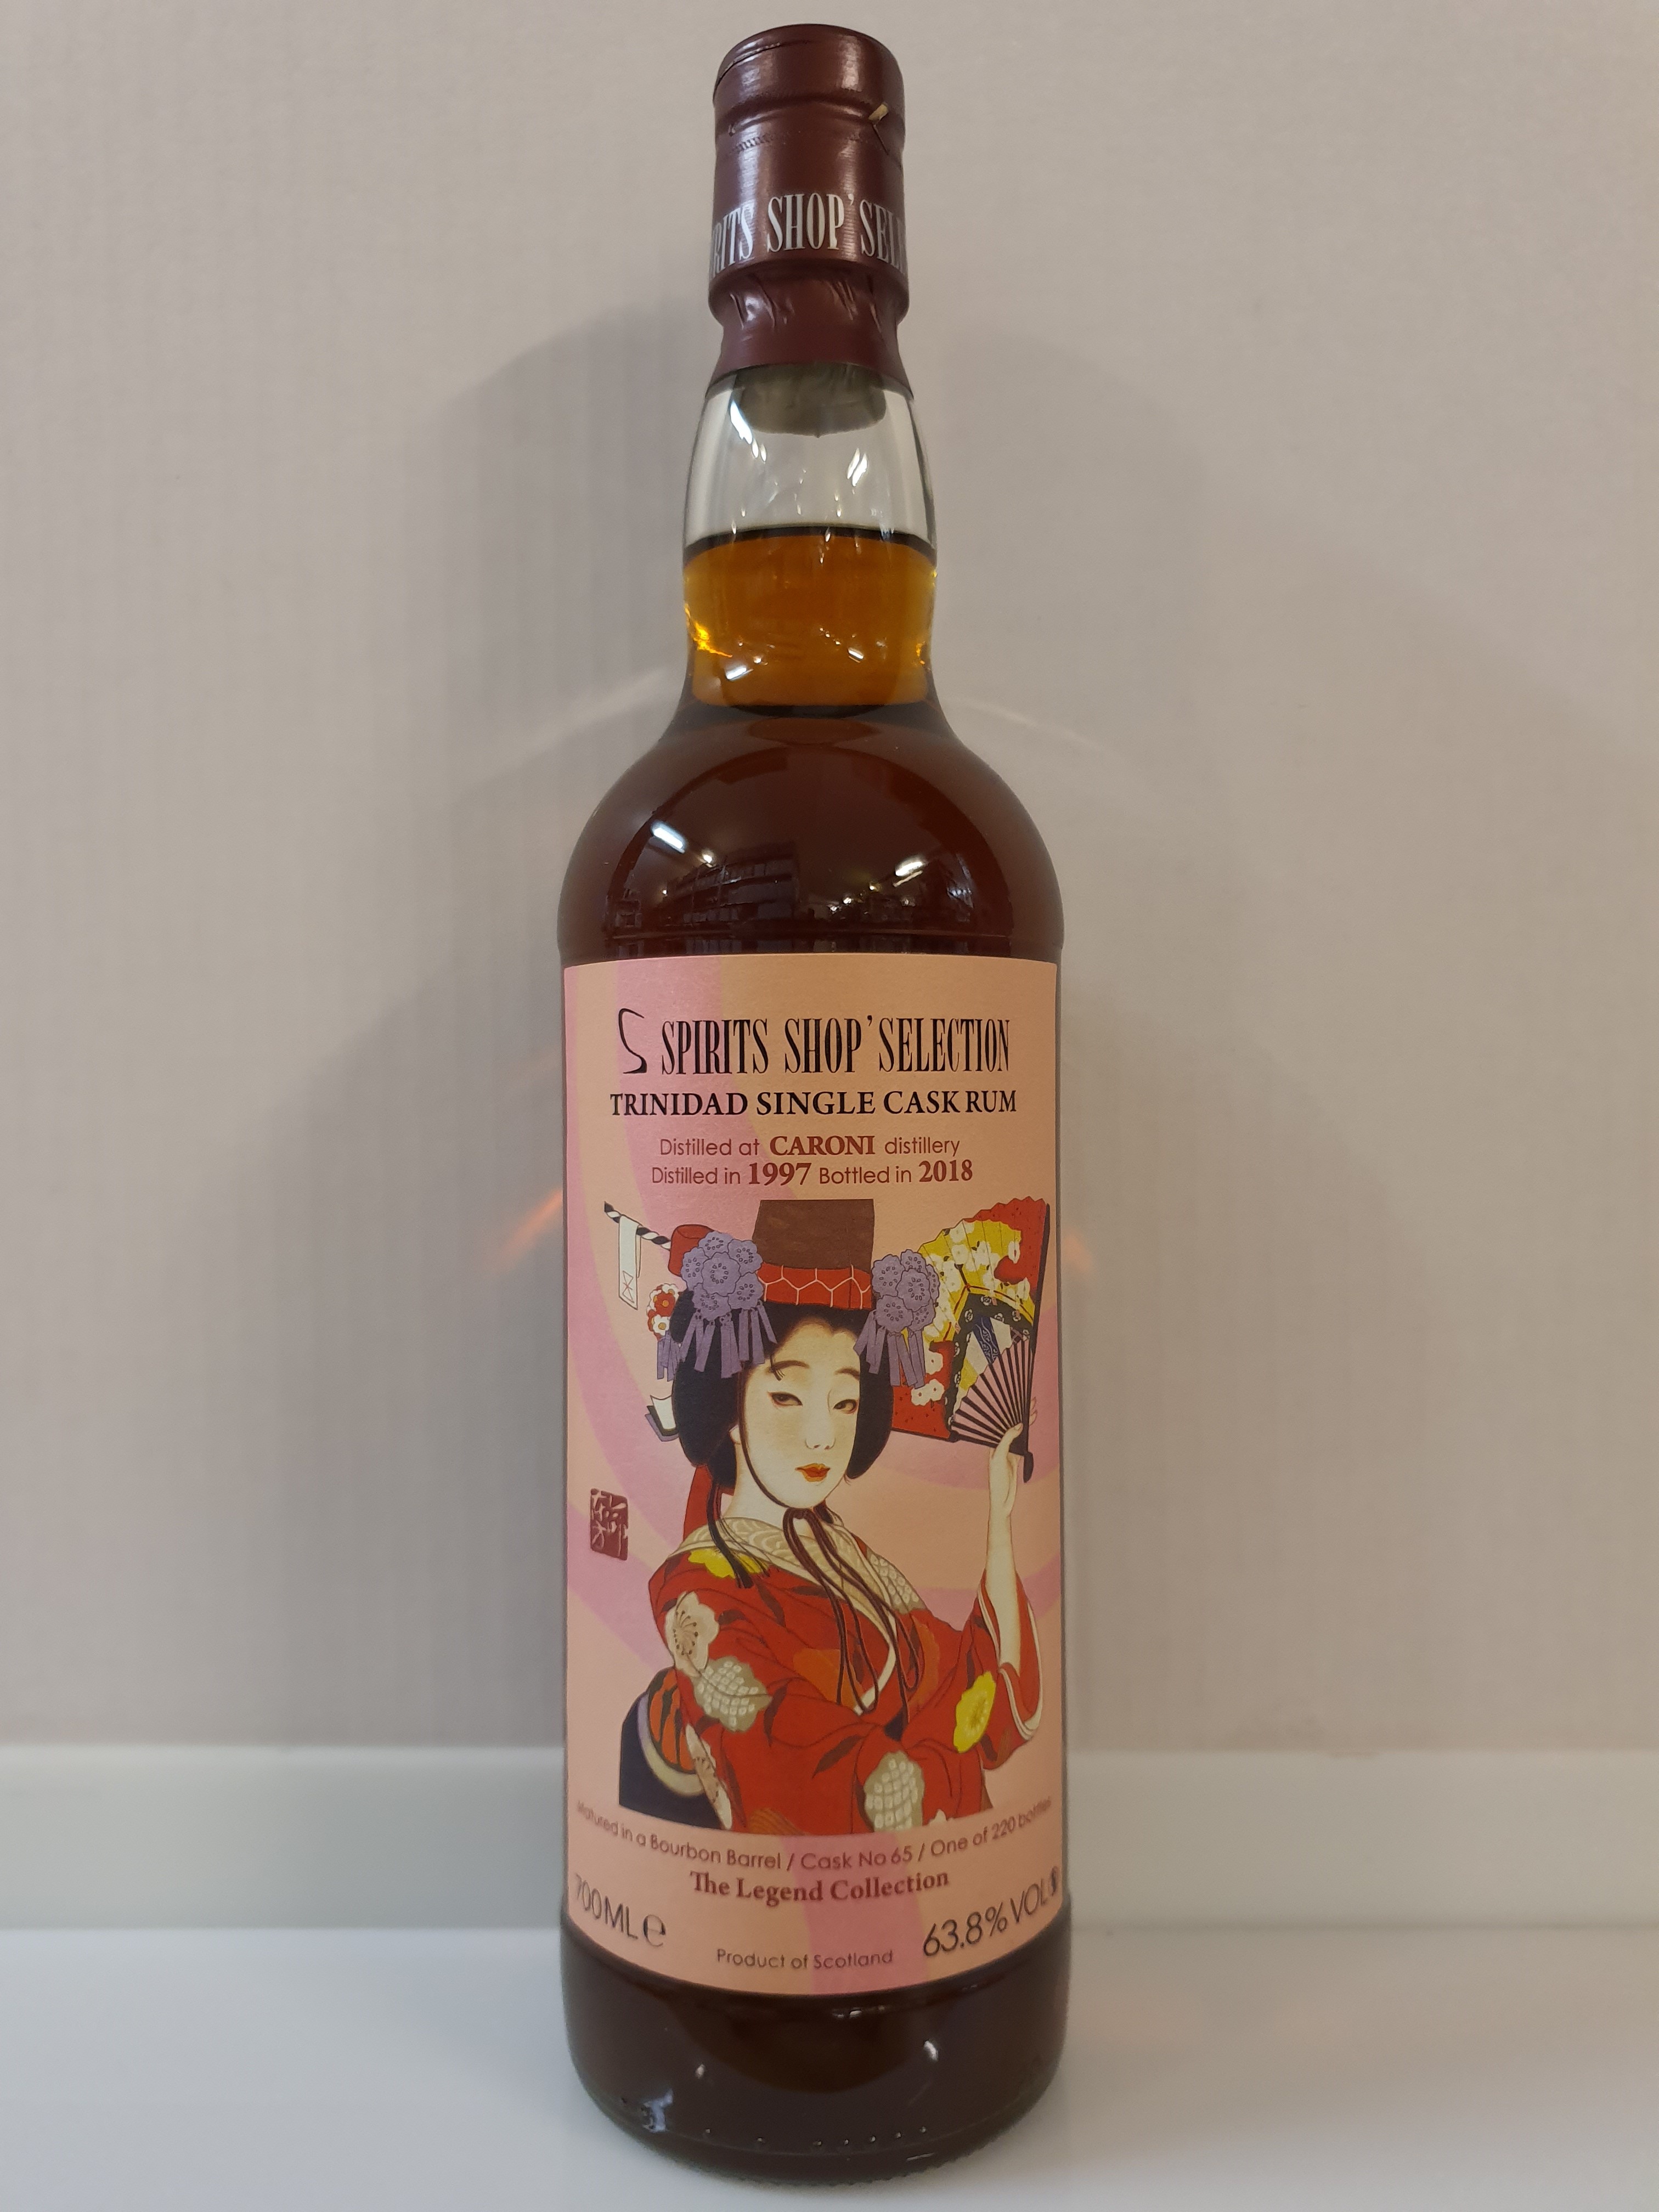 Trinidad Rum (Caroni Distillery) - S-Spirits Shop Selection